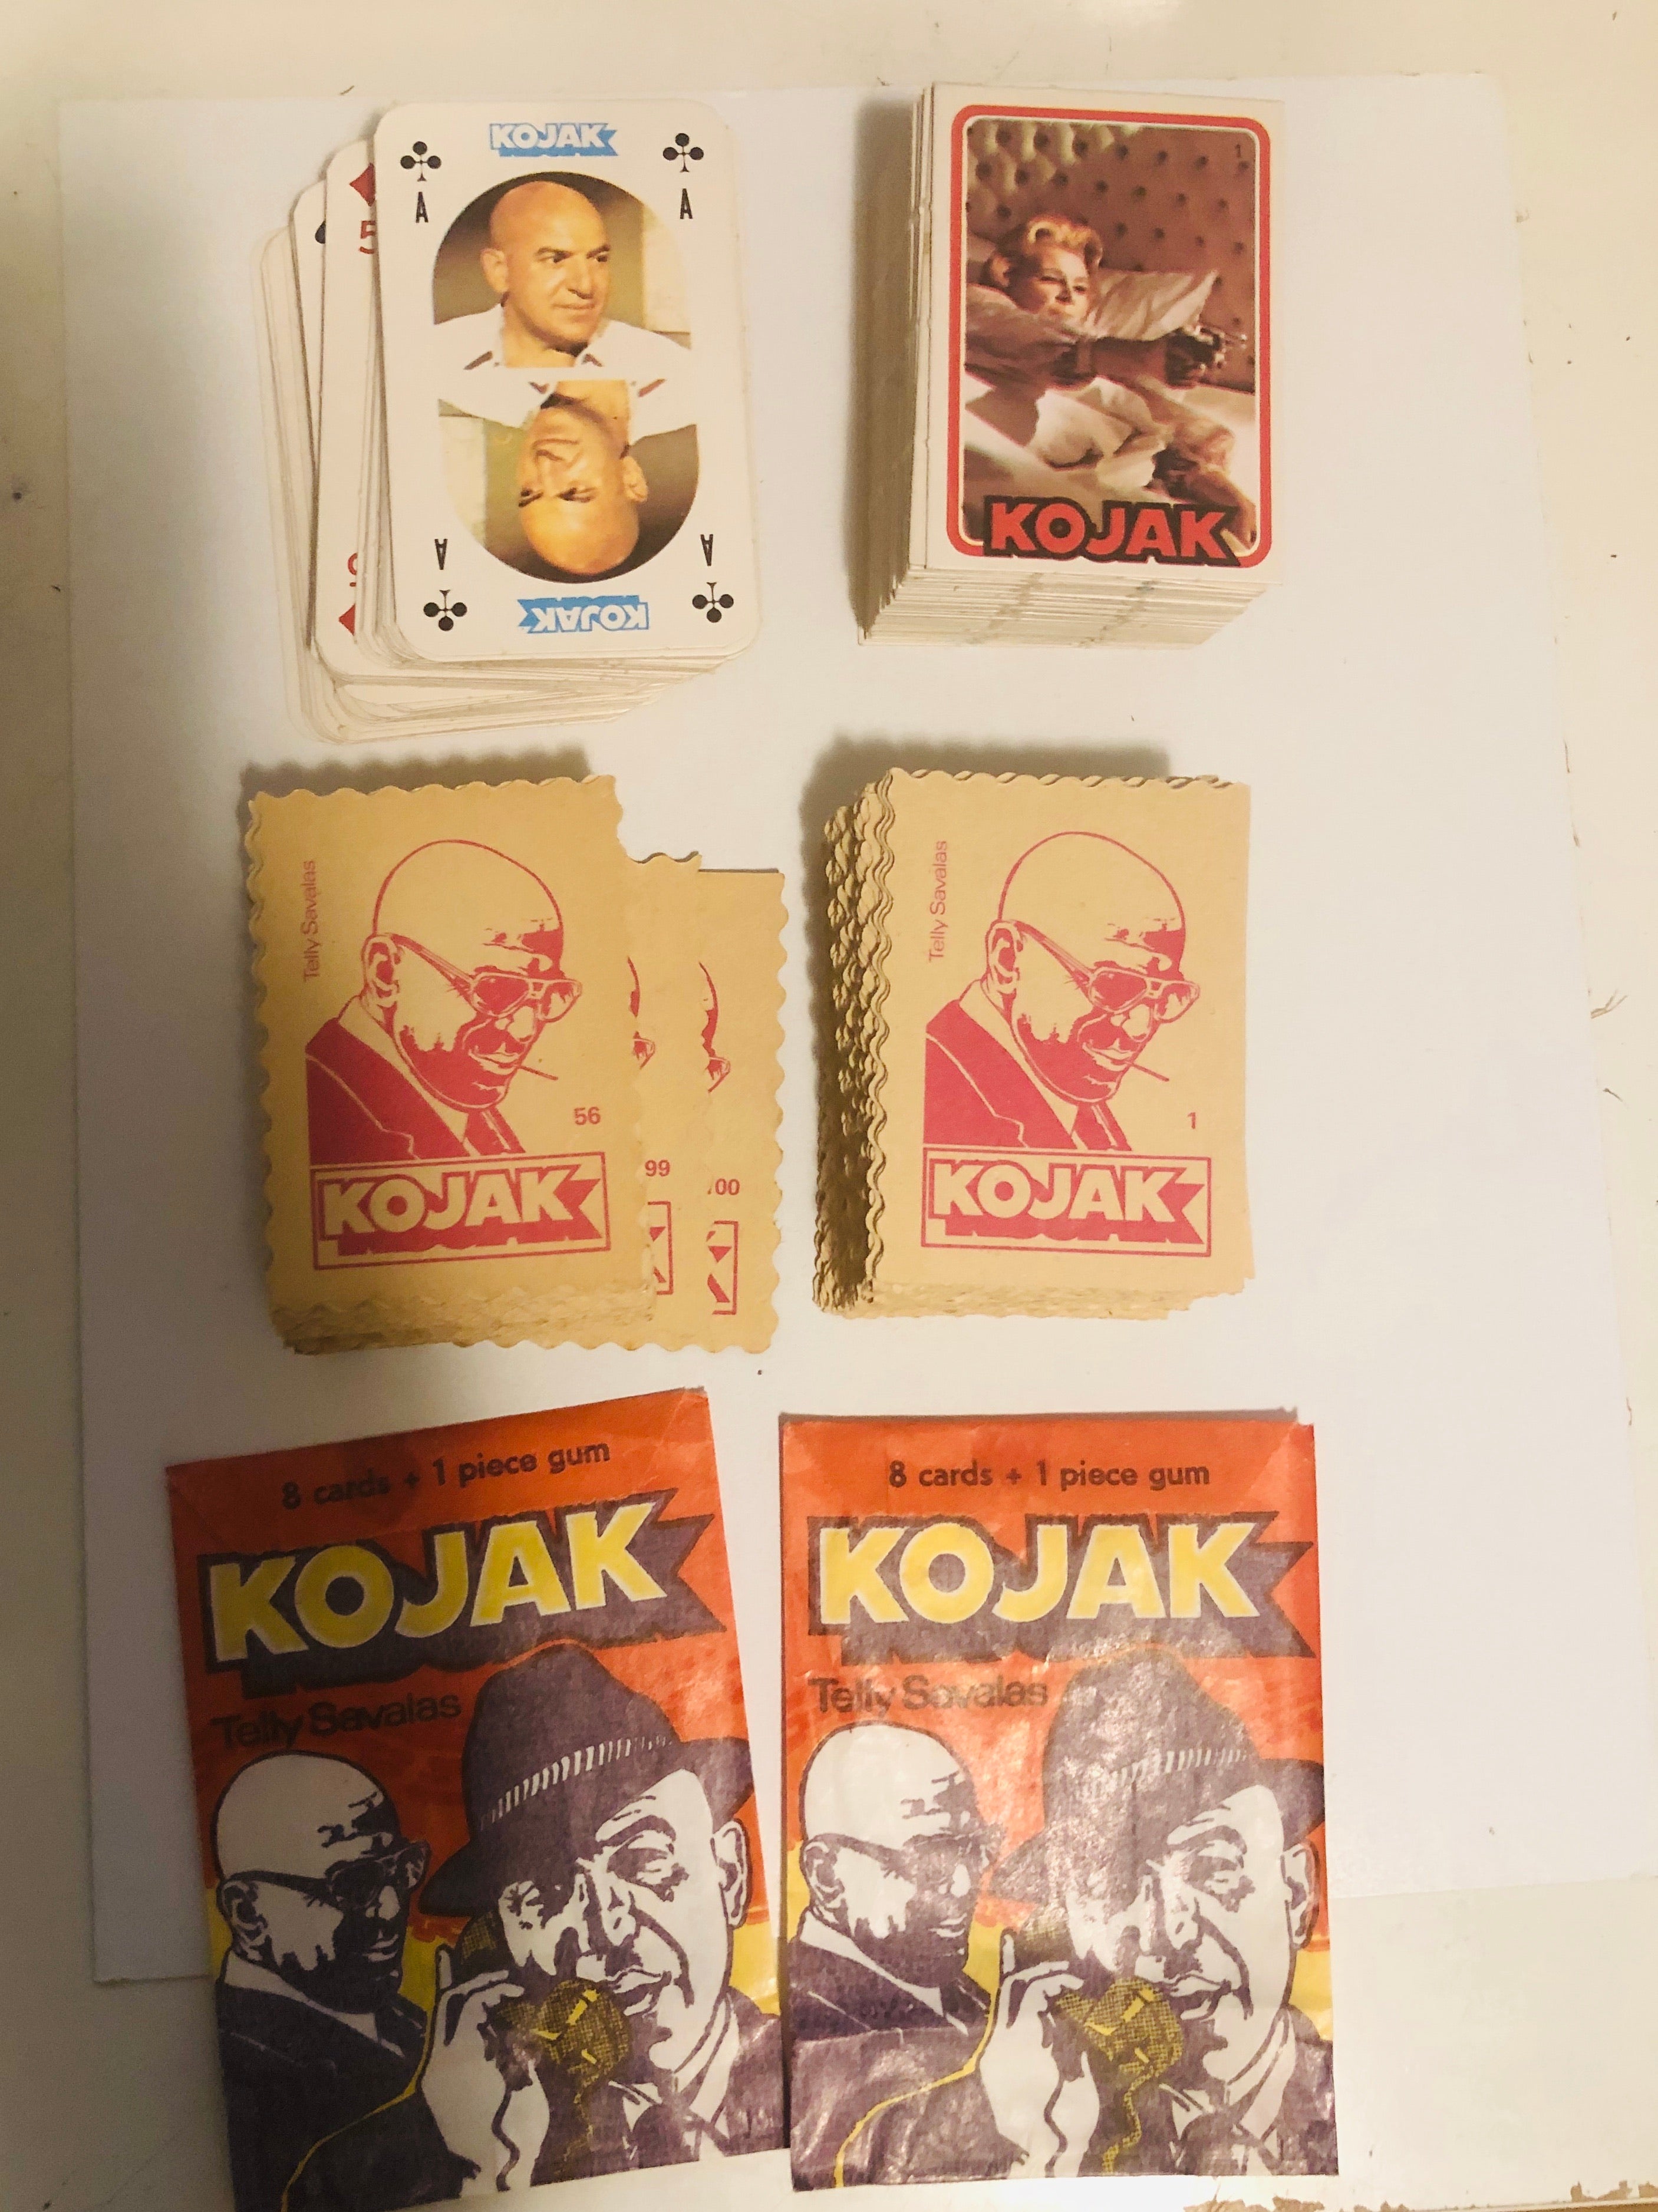 1975 Kojak cop tv show cards set and subsets